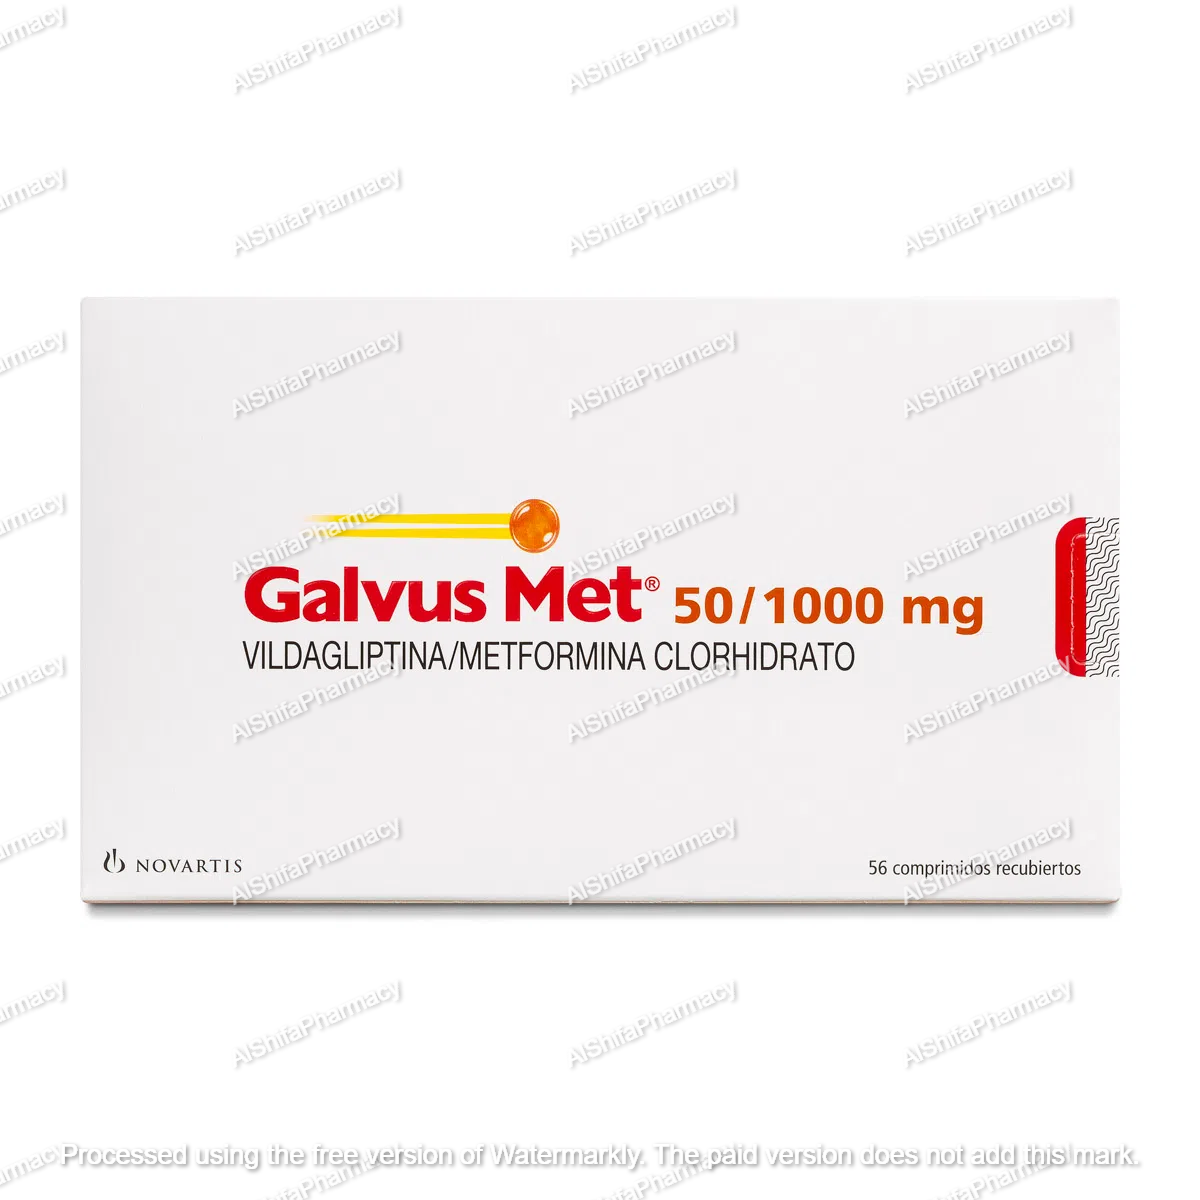 galvus met 50/1000mg alshifa pharmacy